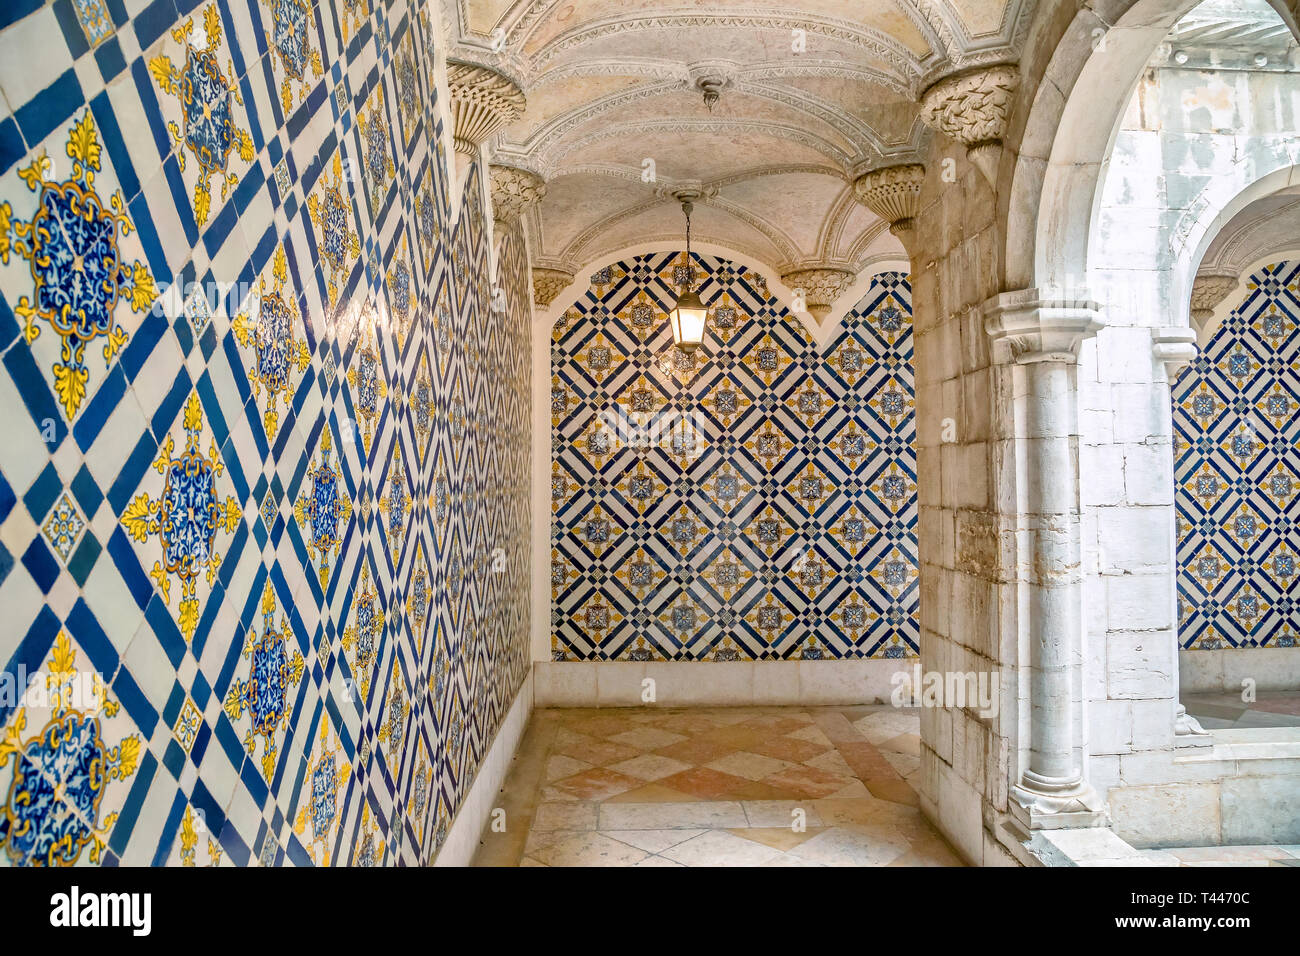 Tiled walls inside Lisbon's National Azulejo tile museum, Portugal Stock Photo